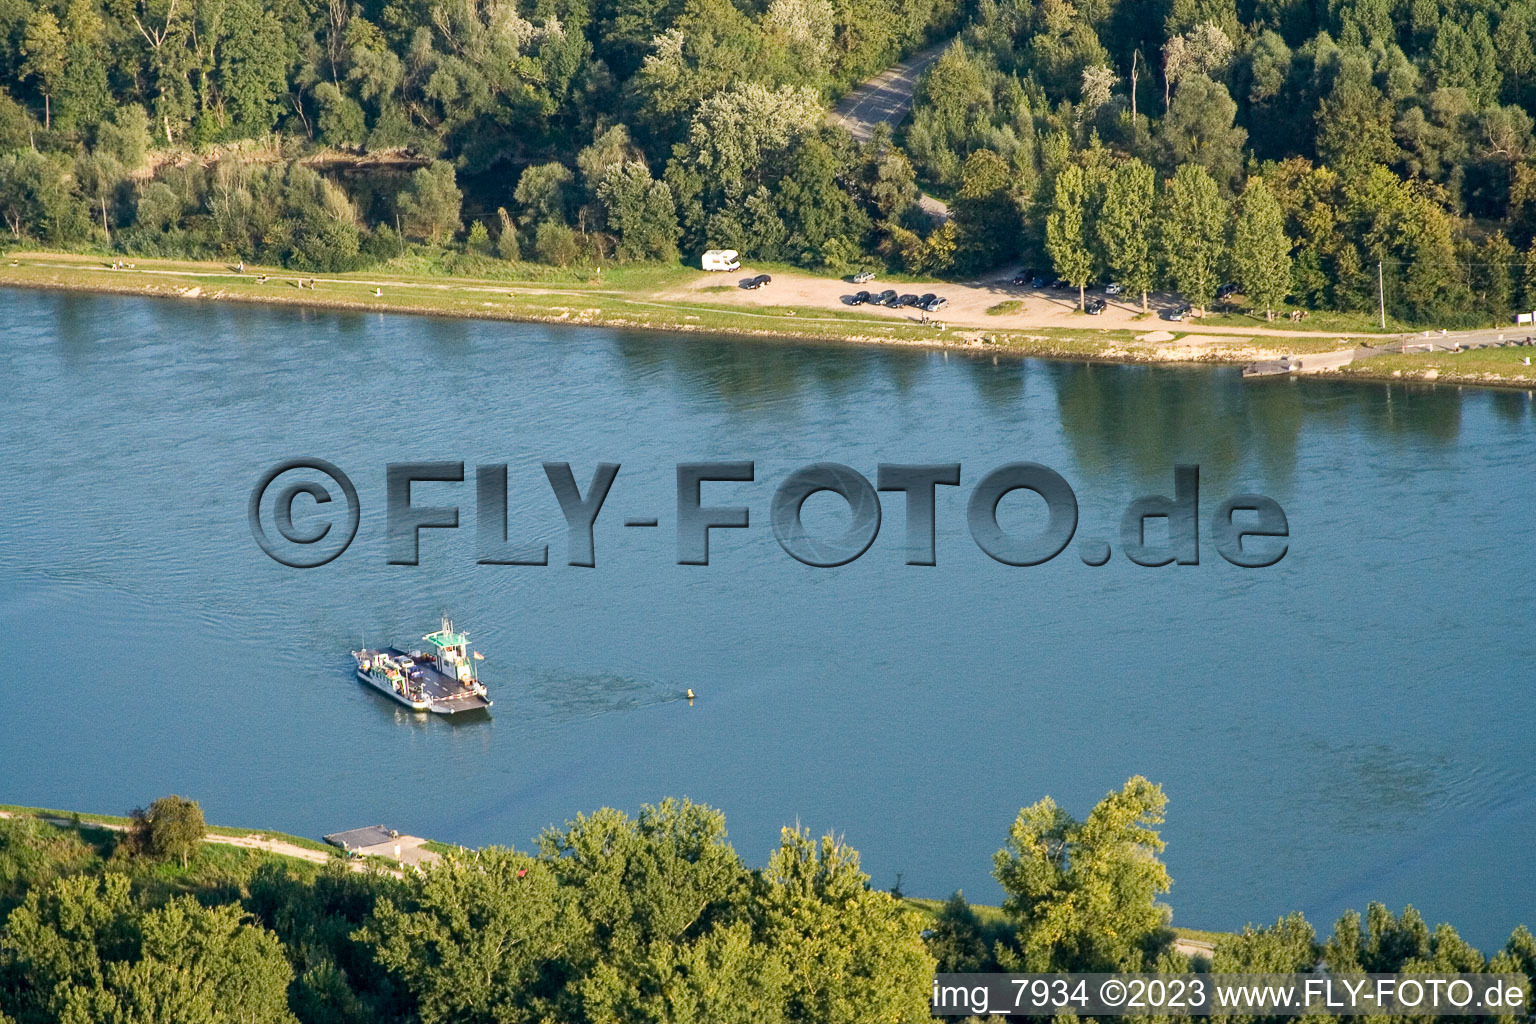 Aerial photograpy of Rhine ferry to Neuburgweier in Neuburg in the state Rhineland-Palatinate, Germany